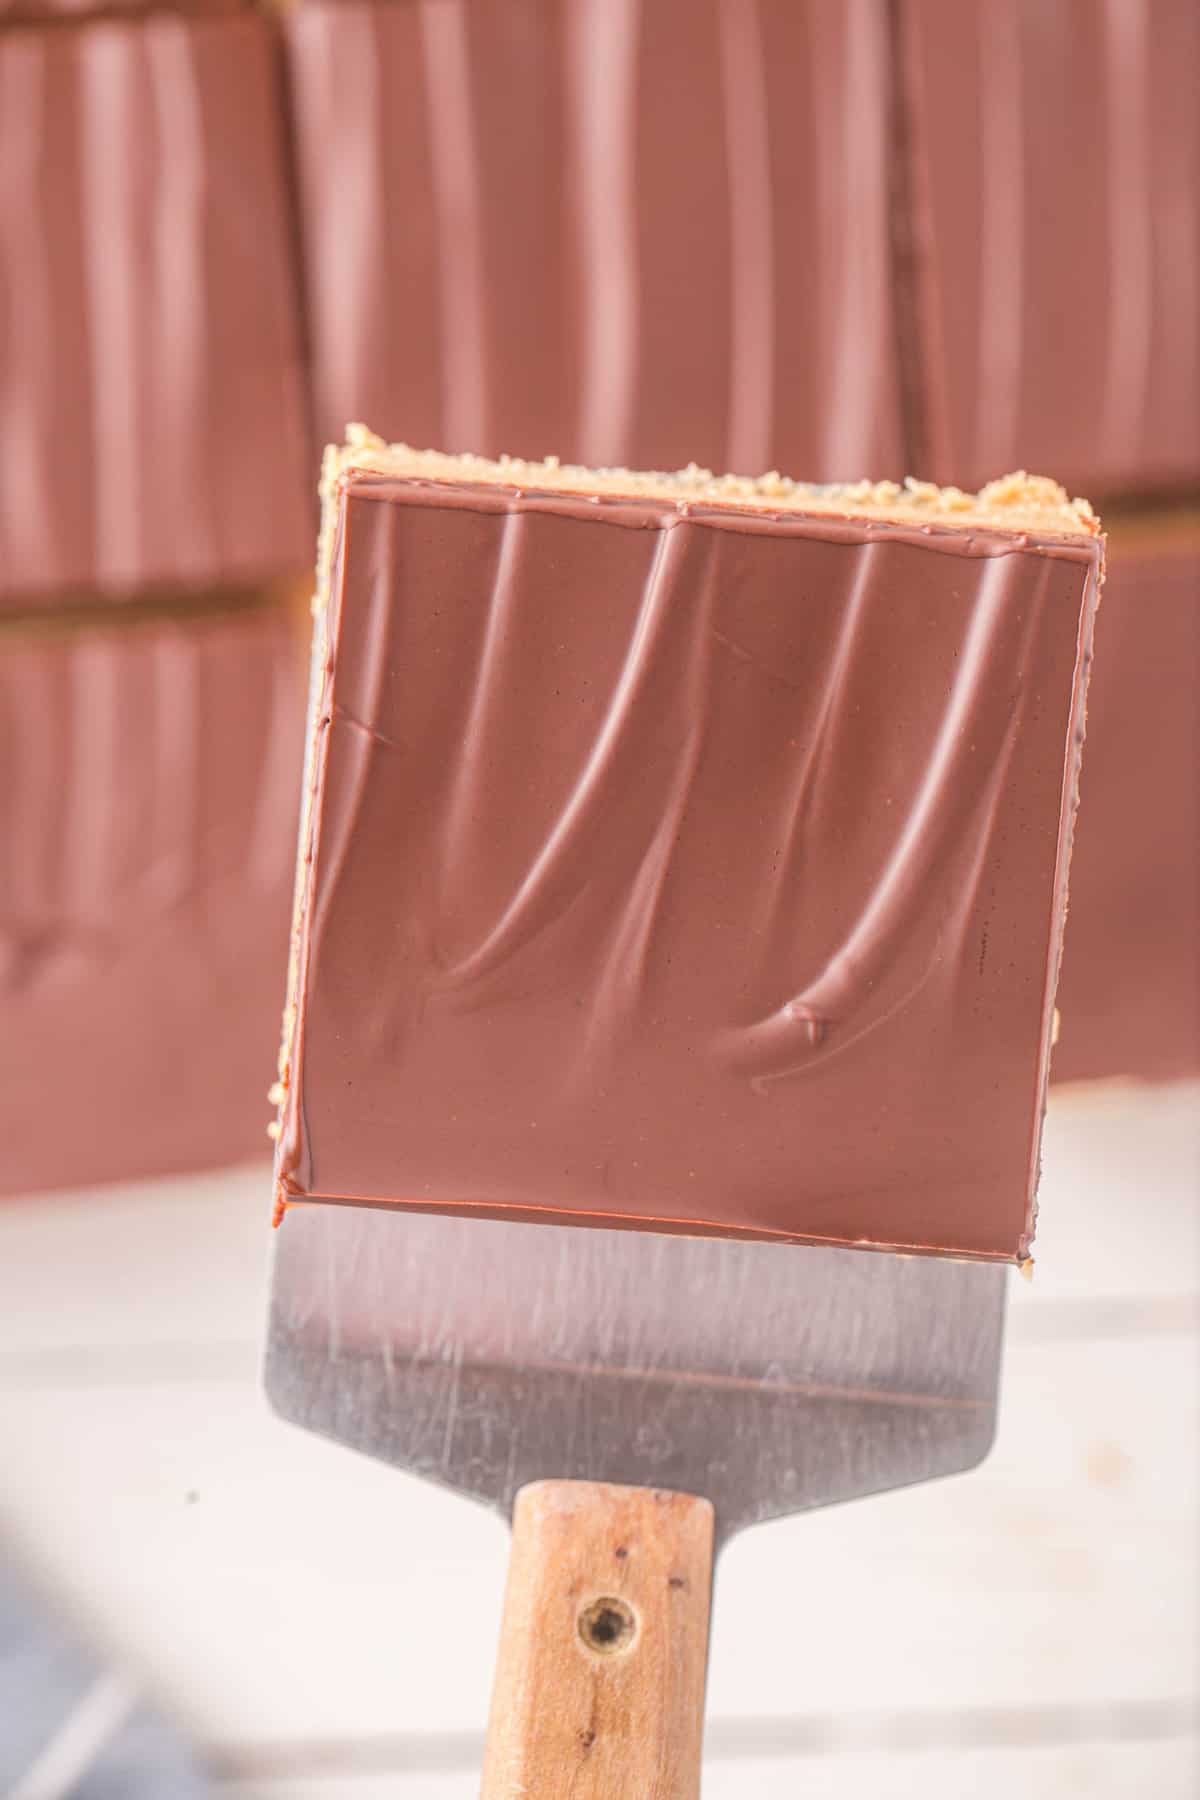 Chocolate Peanut Butter Bars Recipe Ready to Enjoy